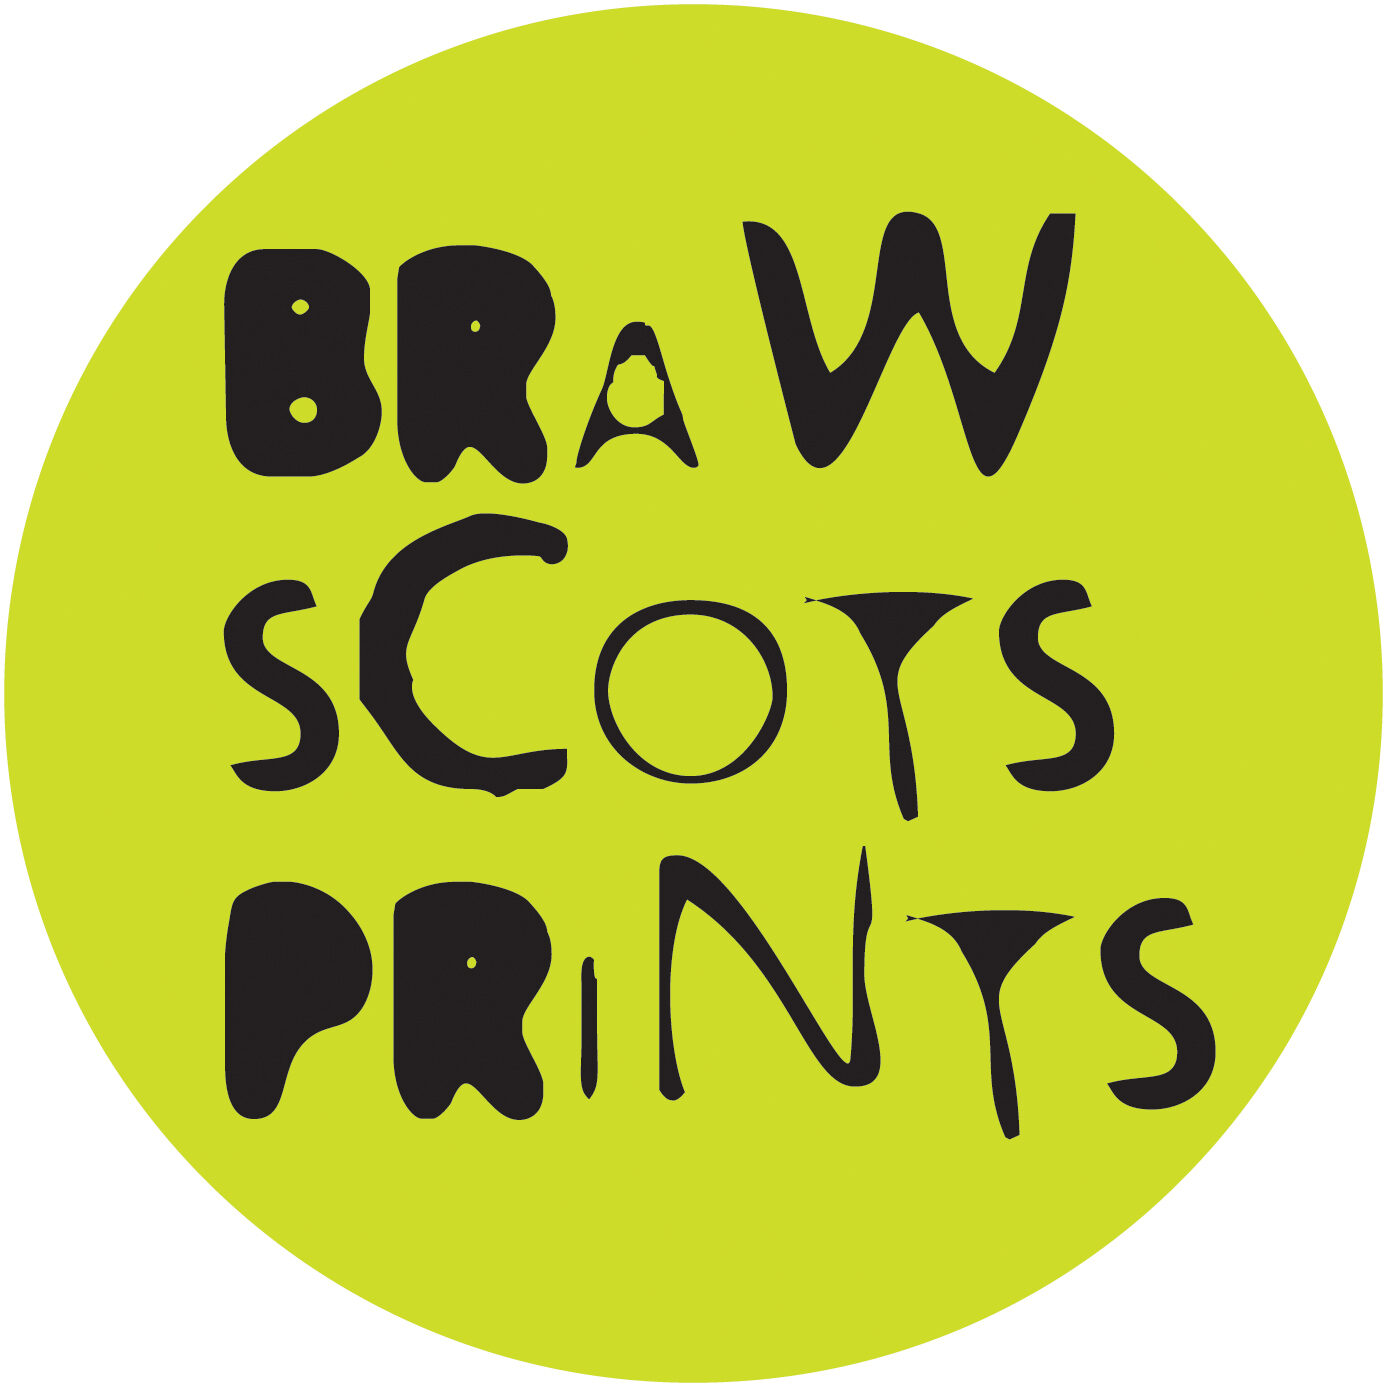 Braw Scots Prints